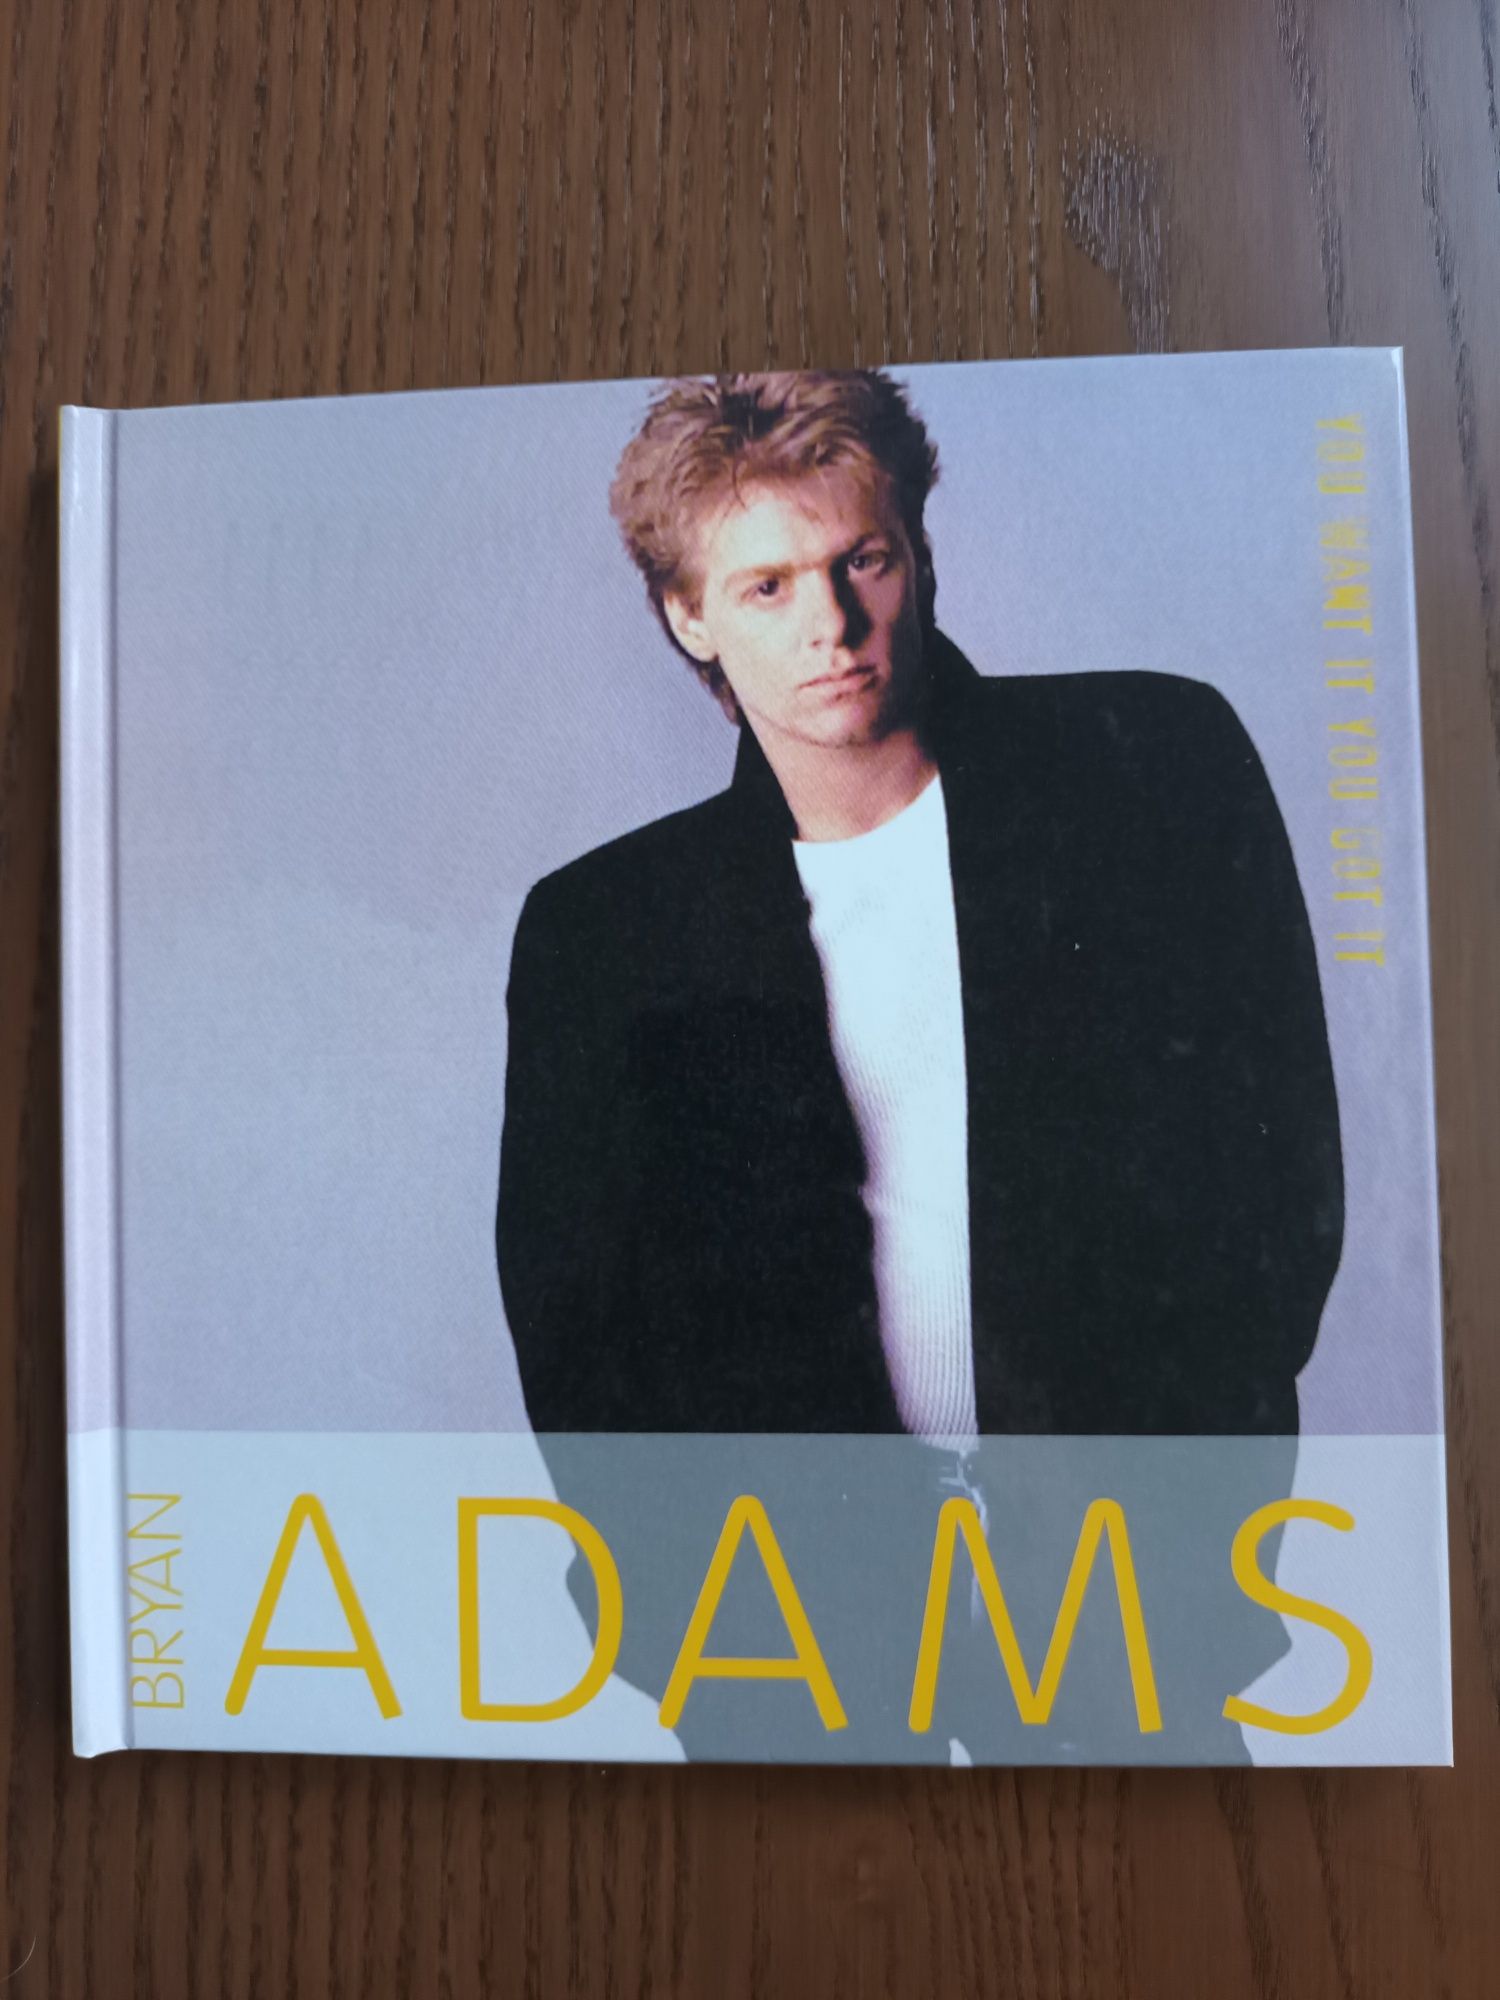 Bryan Adams - cds Coleção